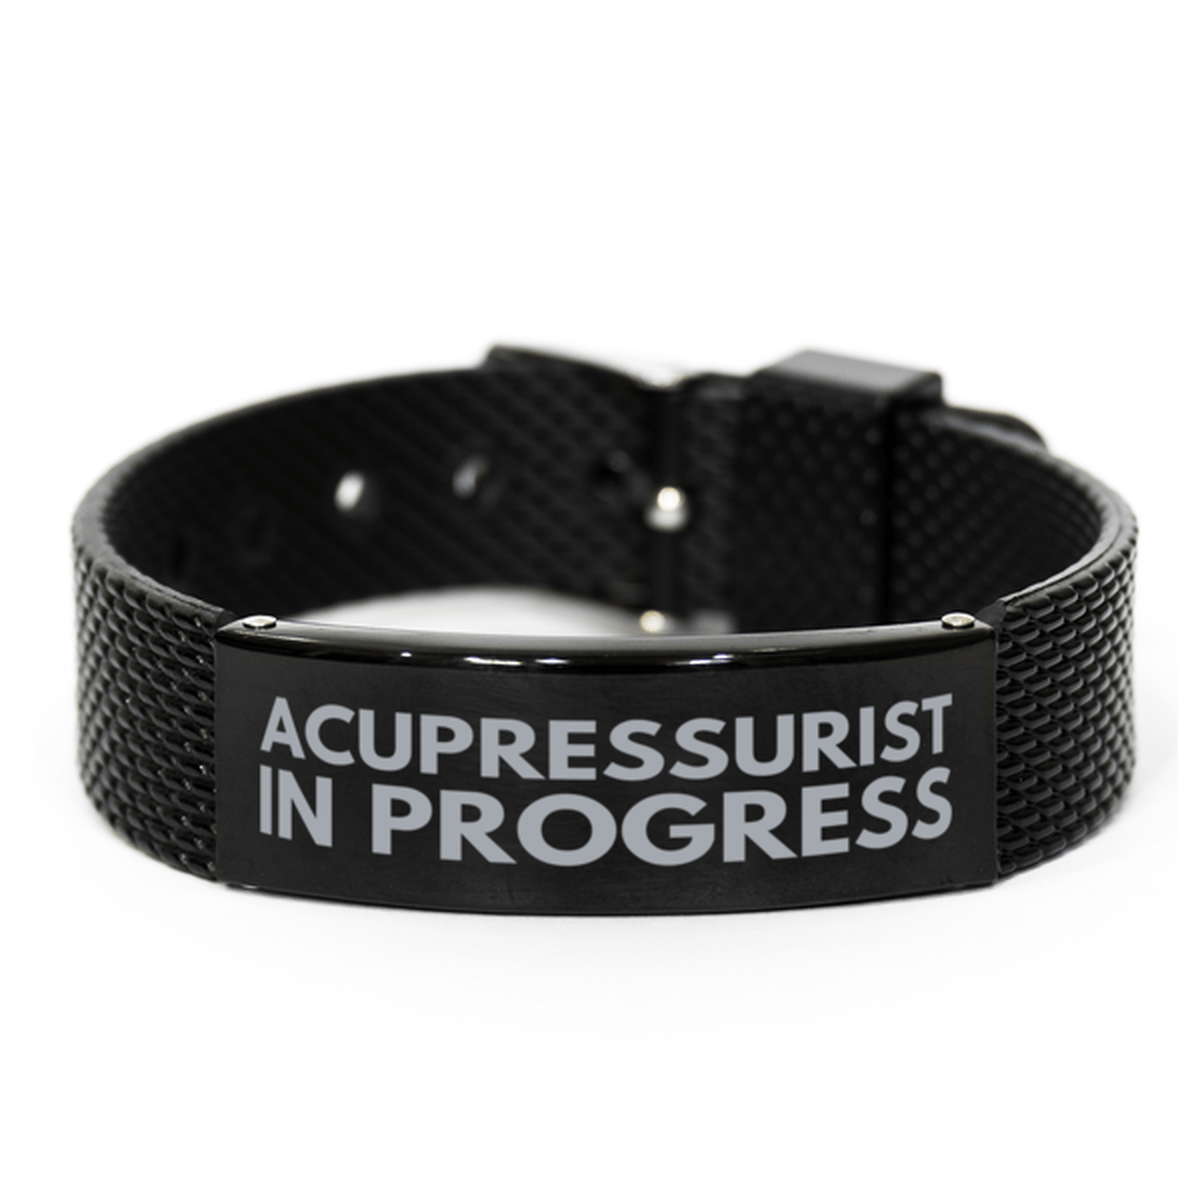 Inspirational Acupressurist Black Shark Mesh Bracelet, Acupressurist In Progress, Best Graduation Gifts for Students